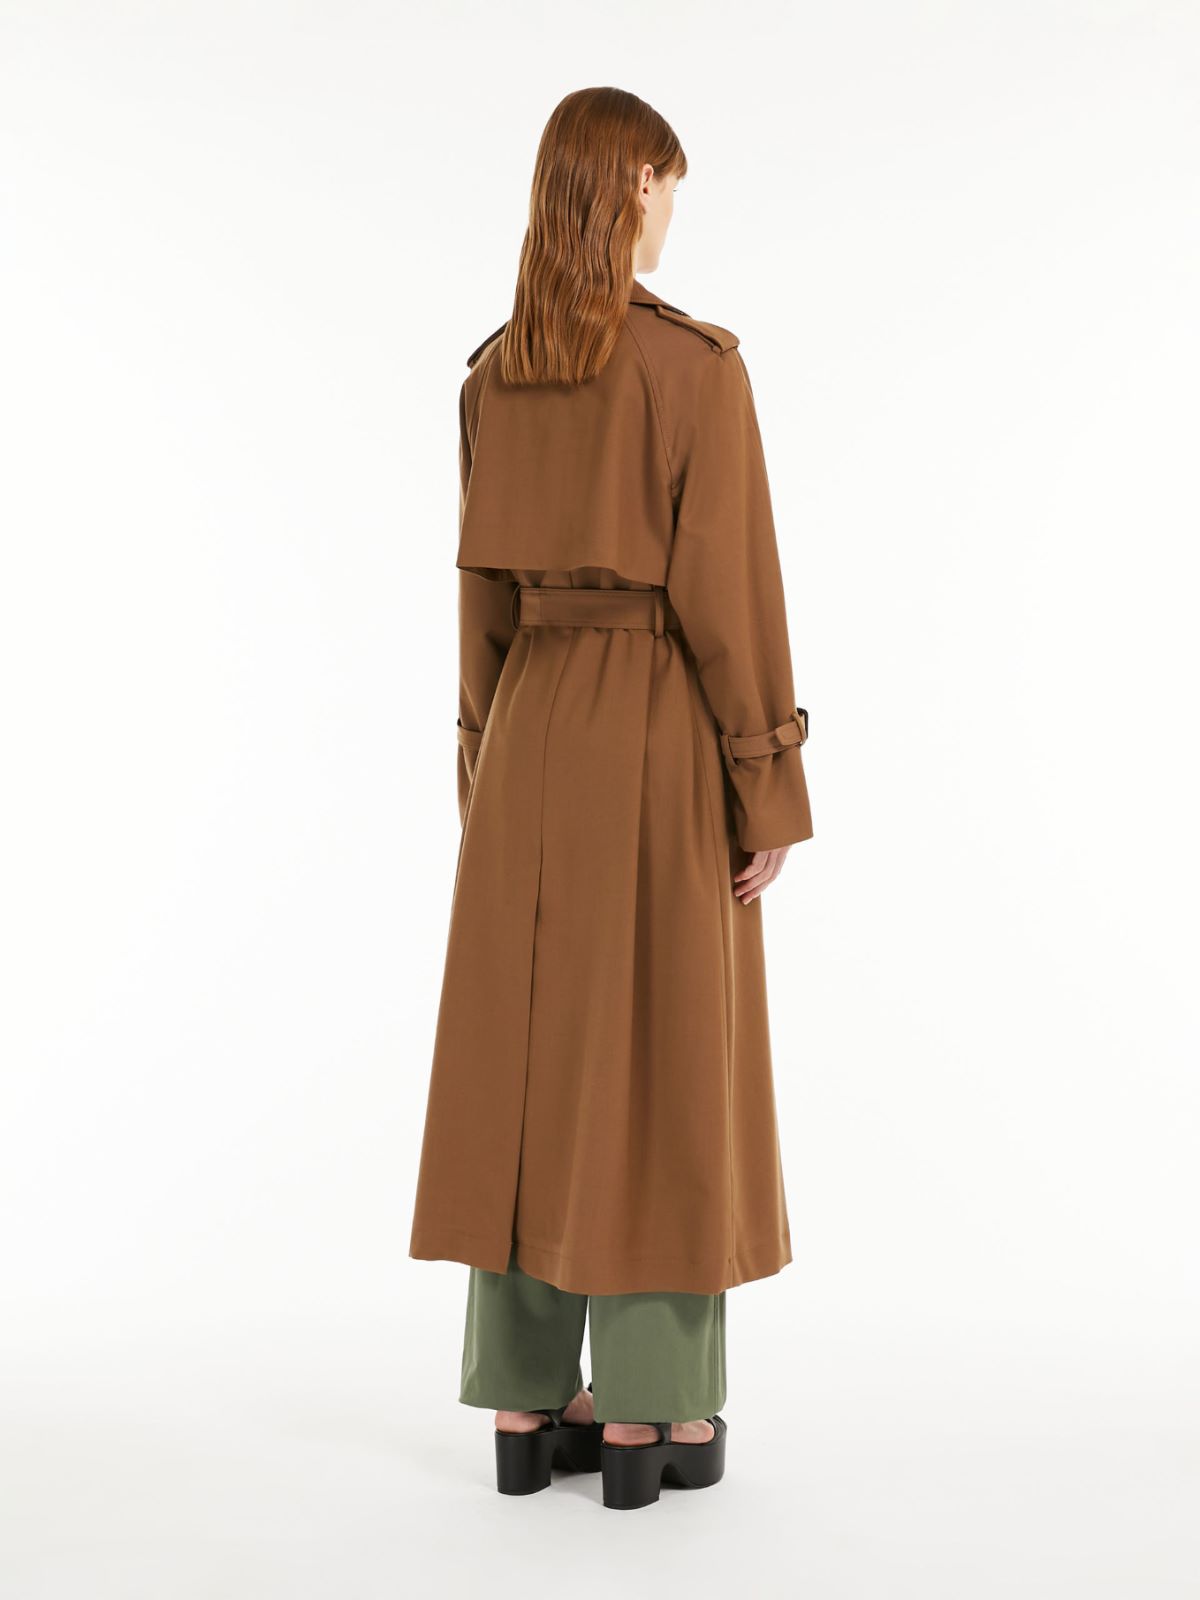 Belted trench coat in showerproof fabric - TOBACCO - Weekend Max Mara - 3